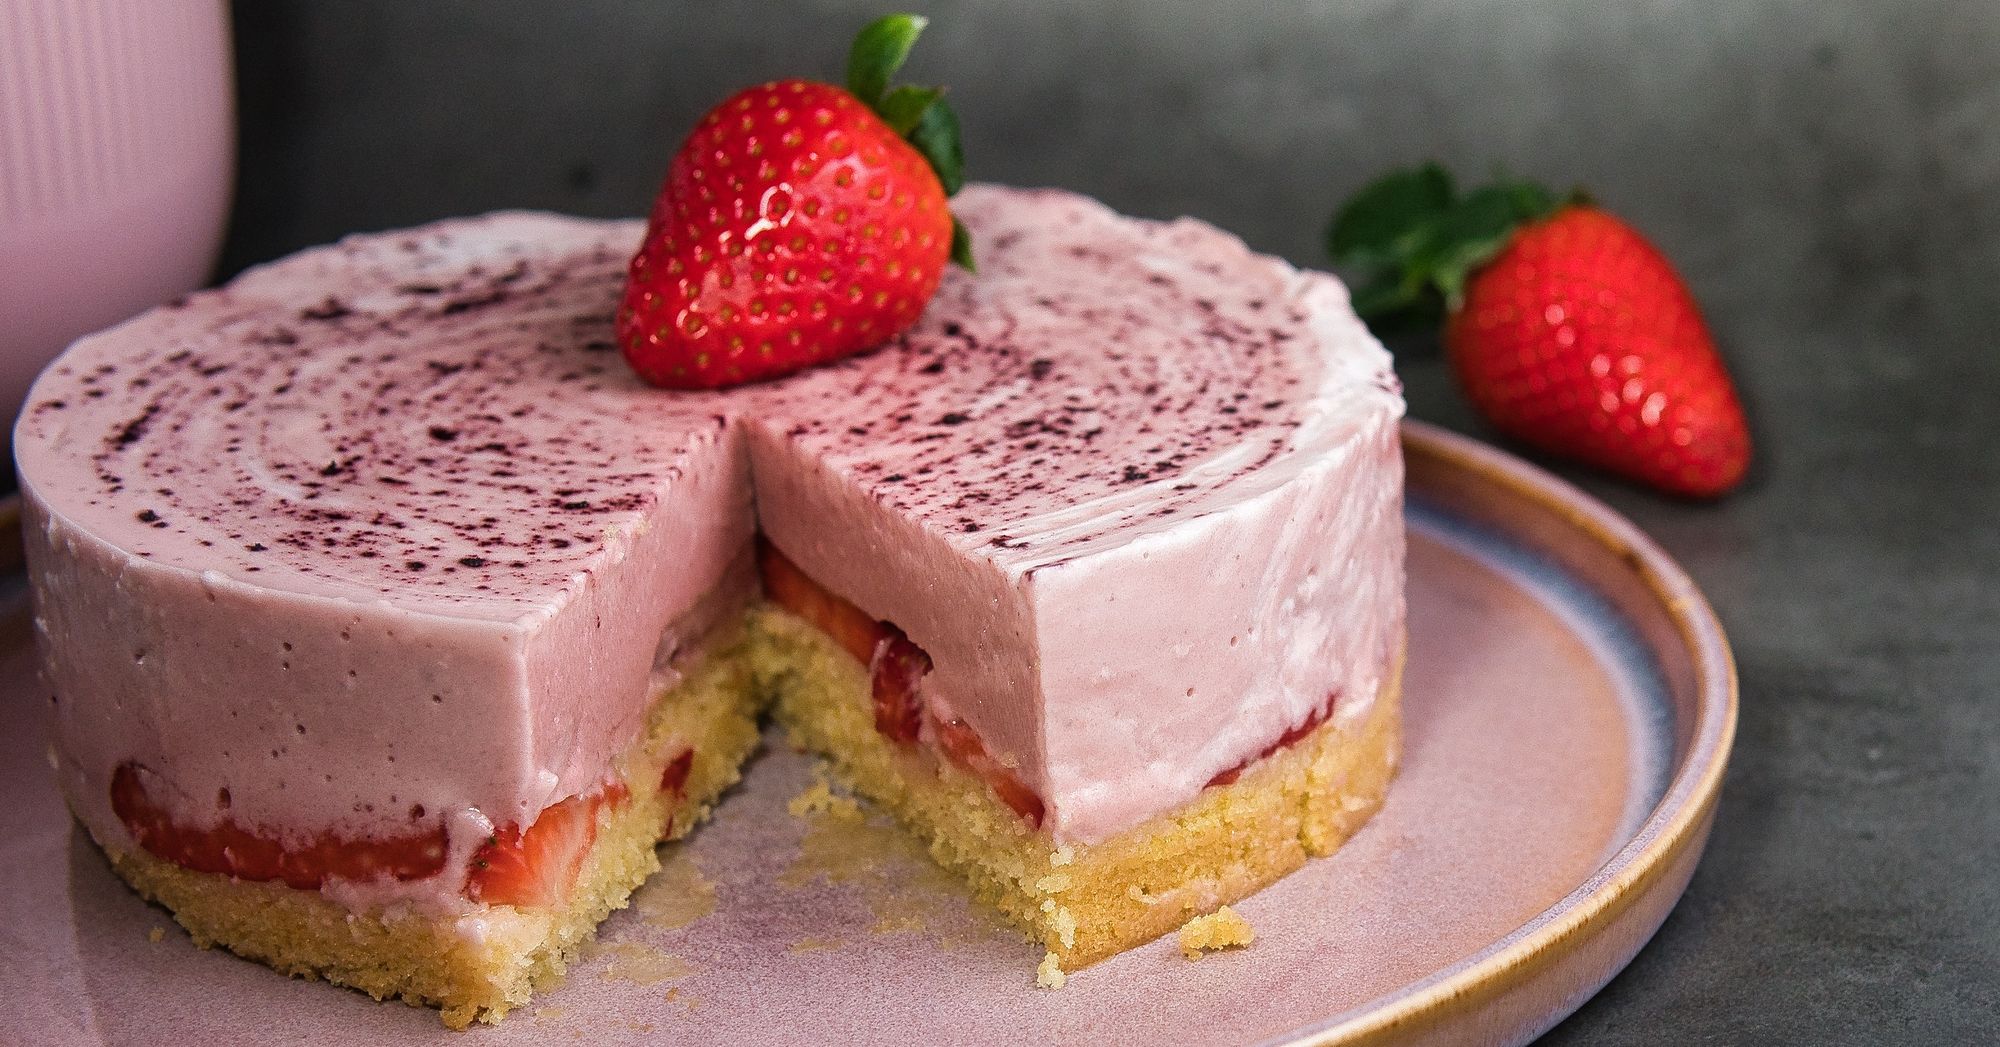 Simple Vegan Strawberry Tart